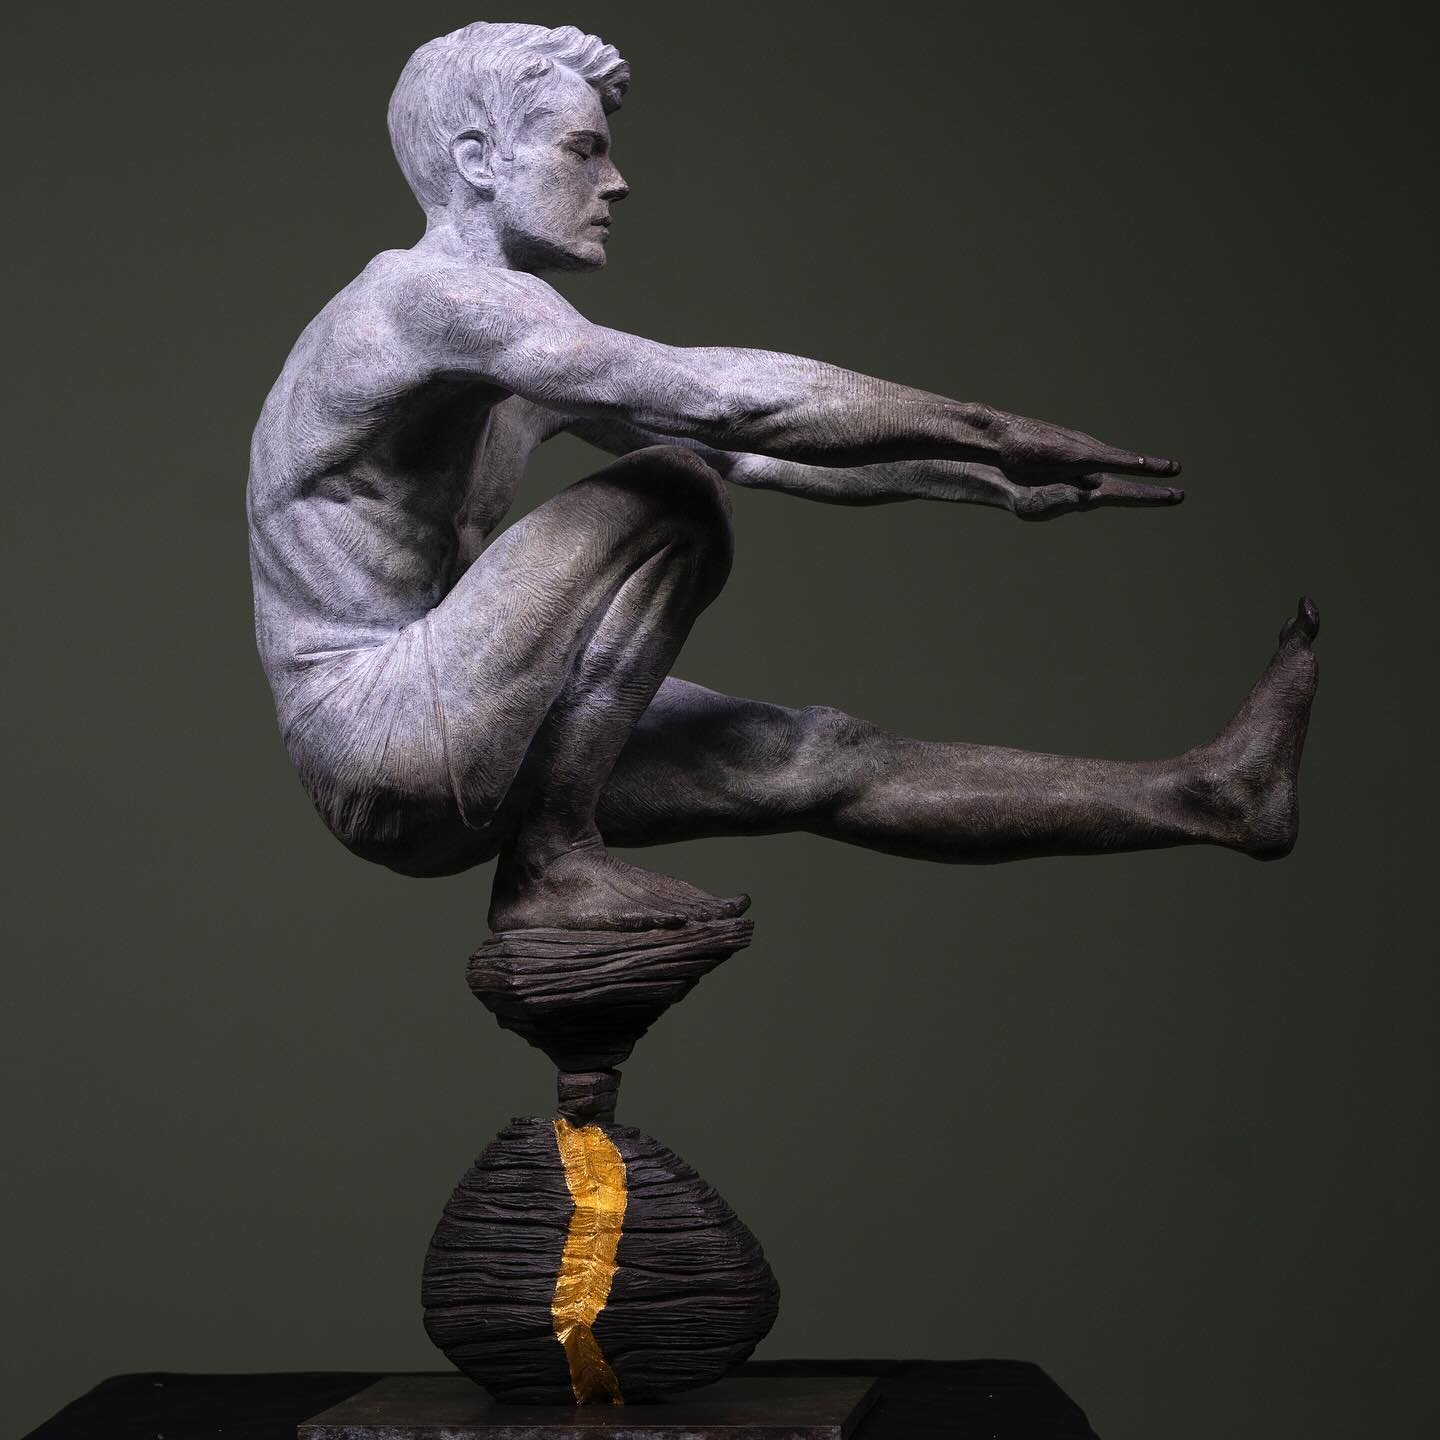 A moment of equilibrium

#sculpture #bronze